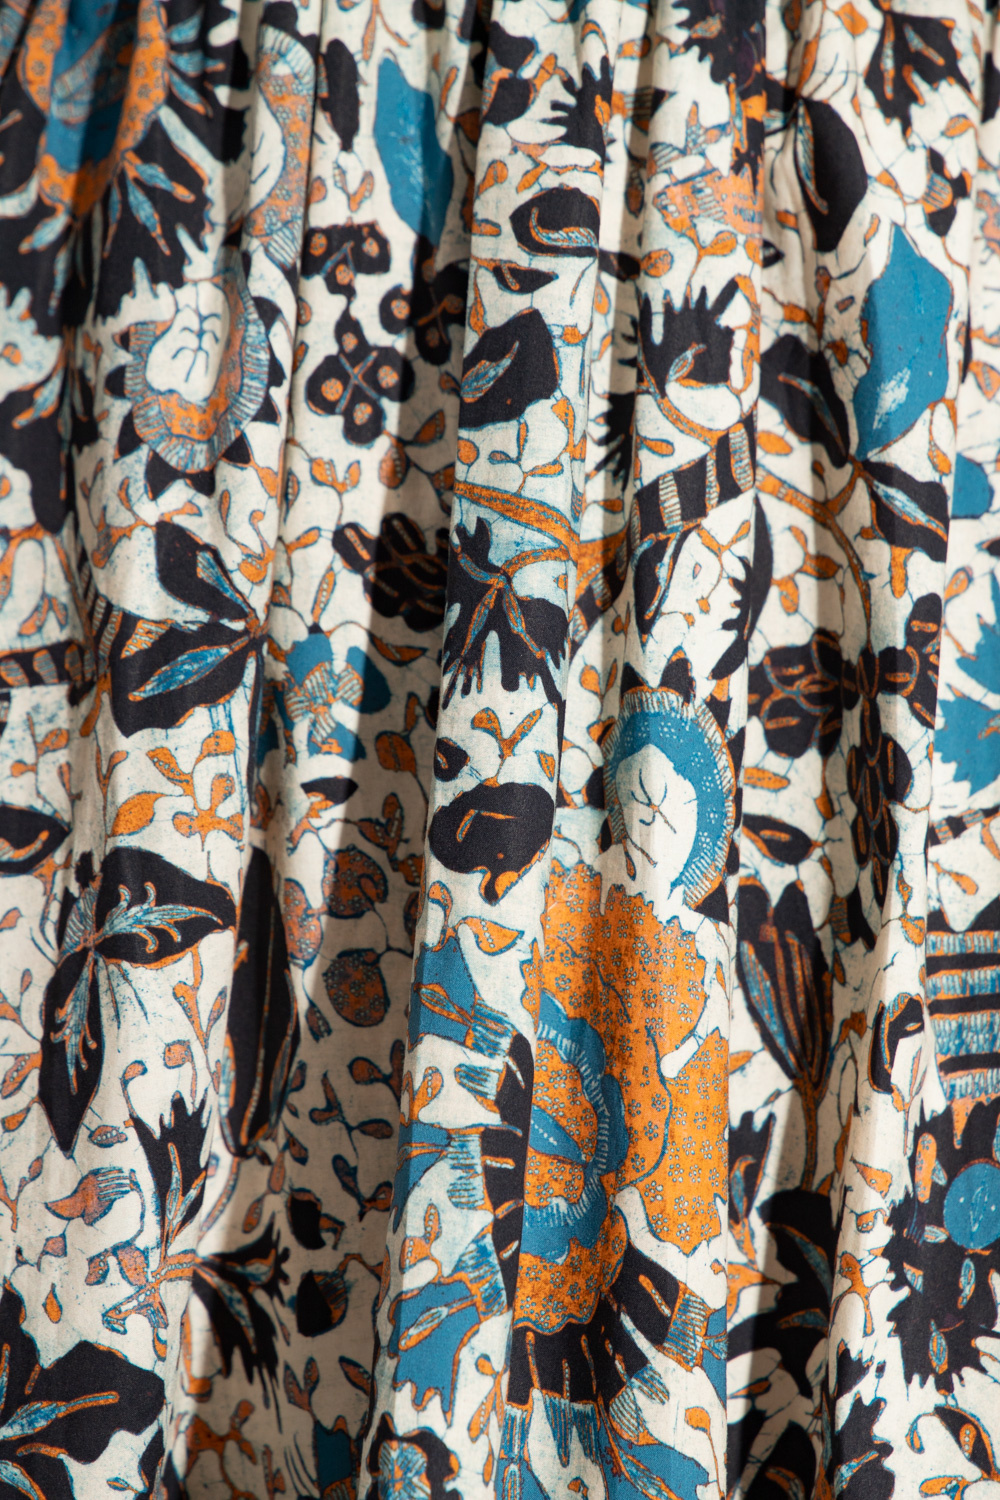 Ulla Johnson ‘Delila’ patterned dress